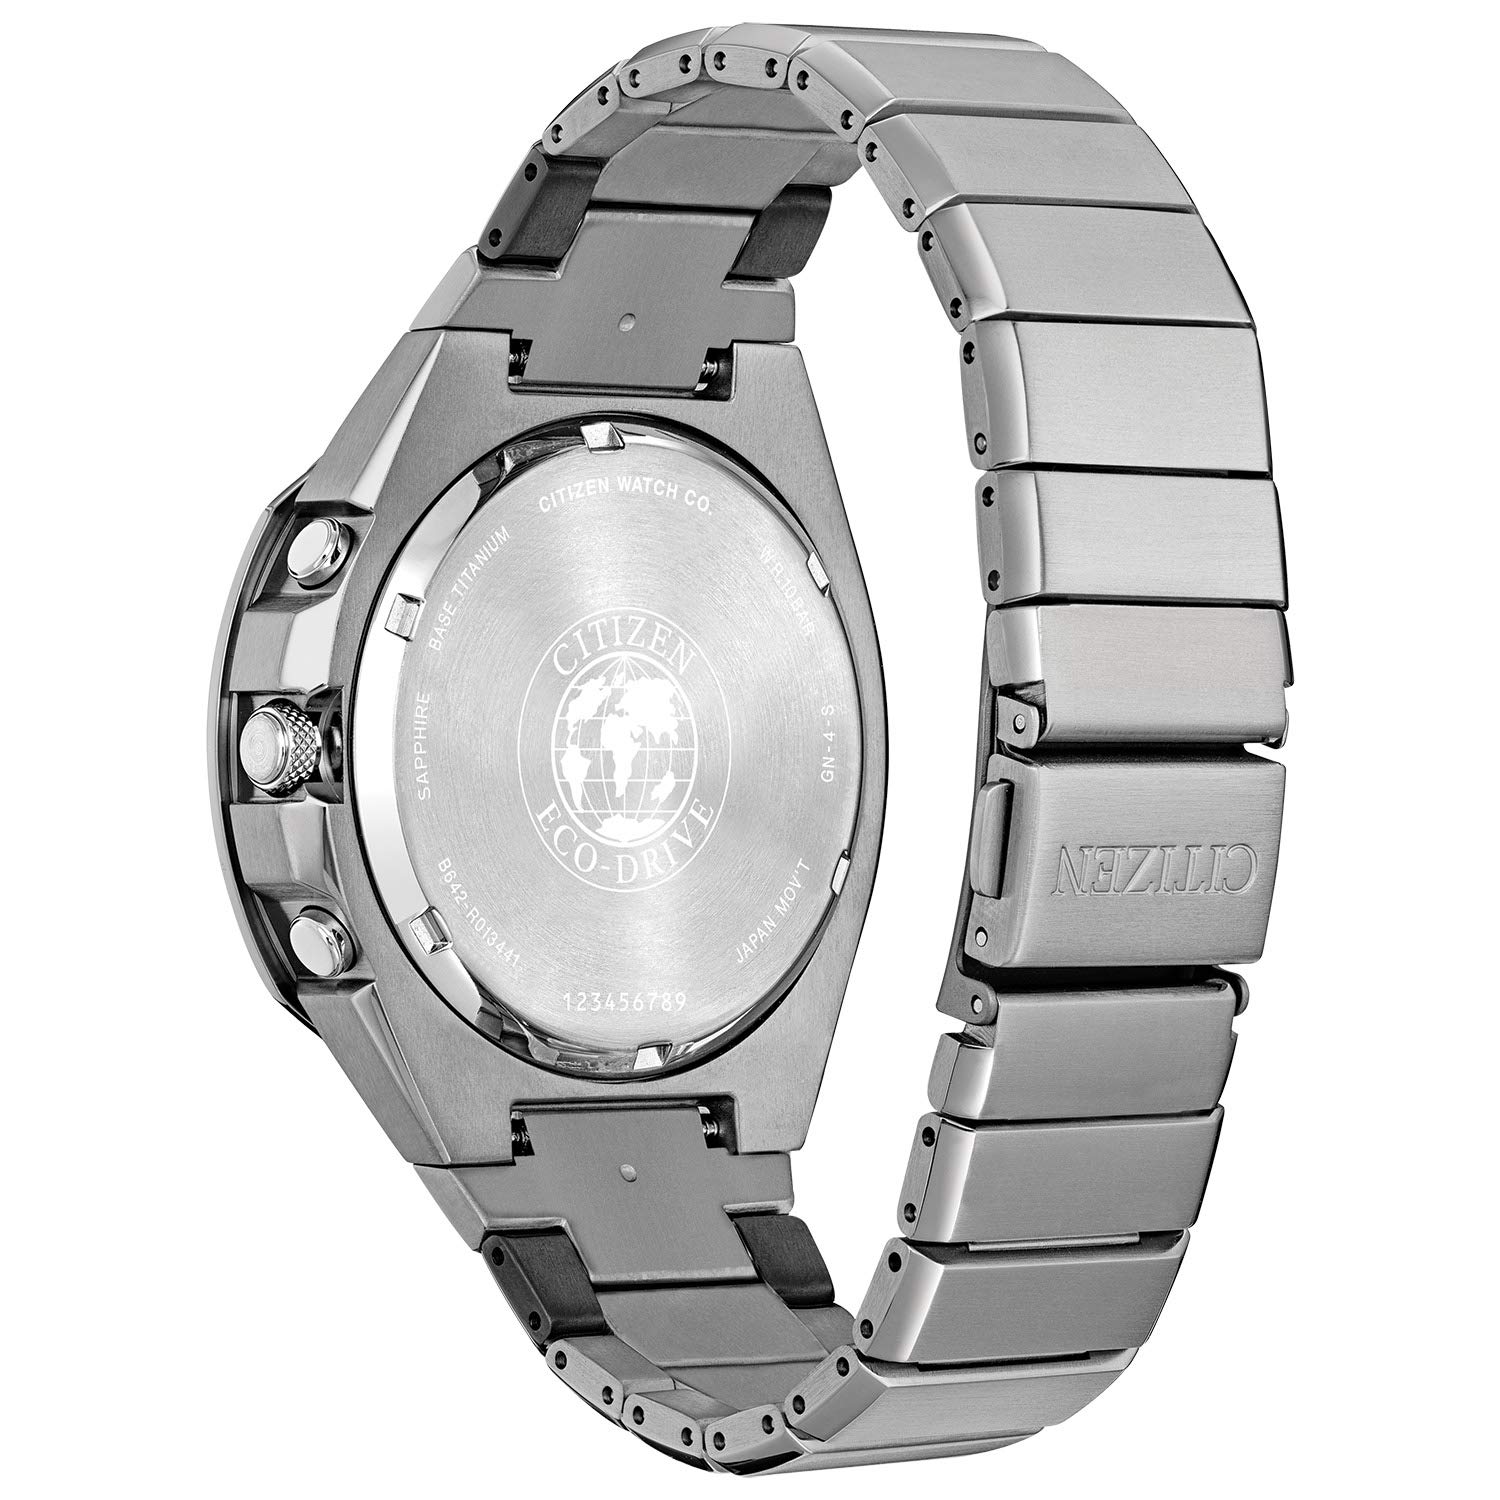 Citizen Men's Eco-Drive Sport Luxury Armor Watch in Super Titanium, Black Dial (Model: CA7058-55E)